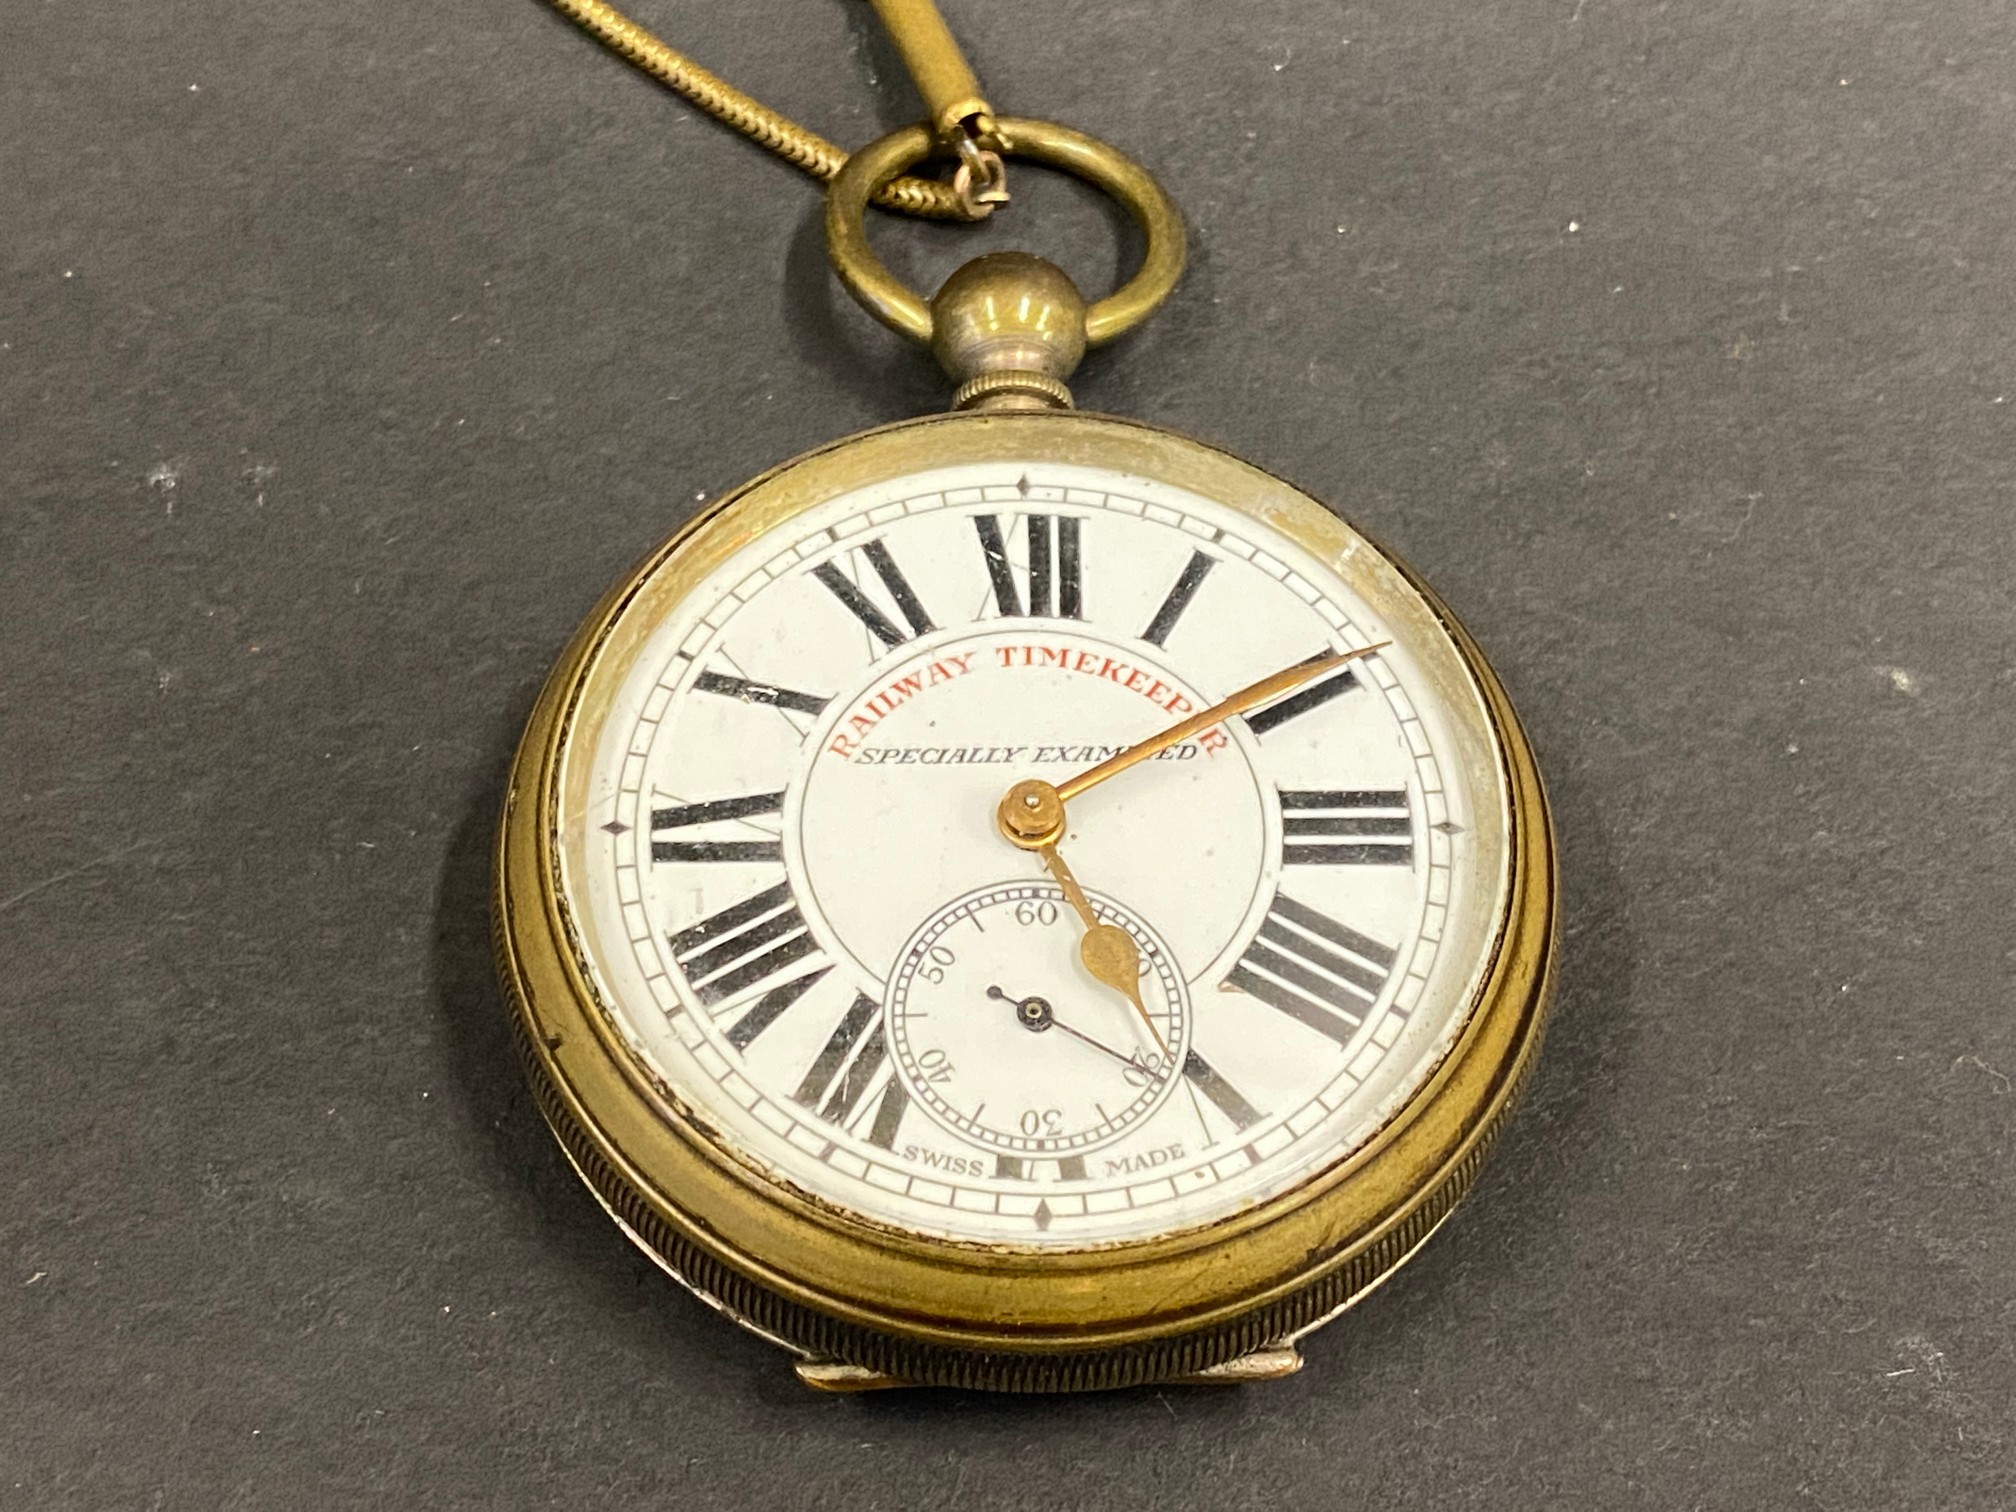 A Railway Timekeeper pocket watch.